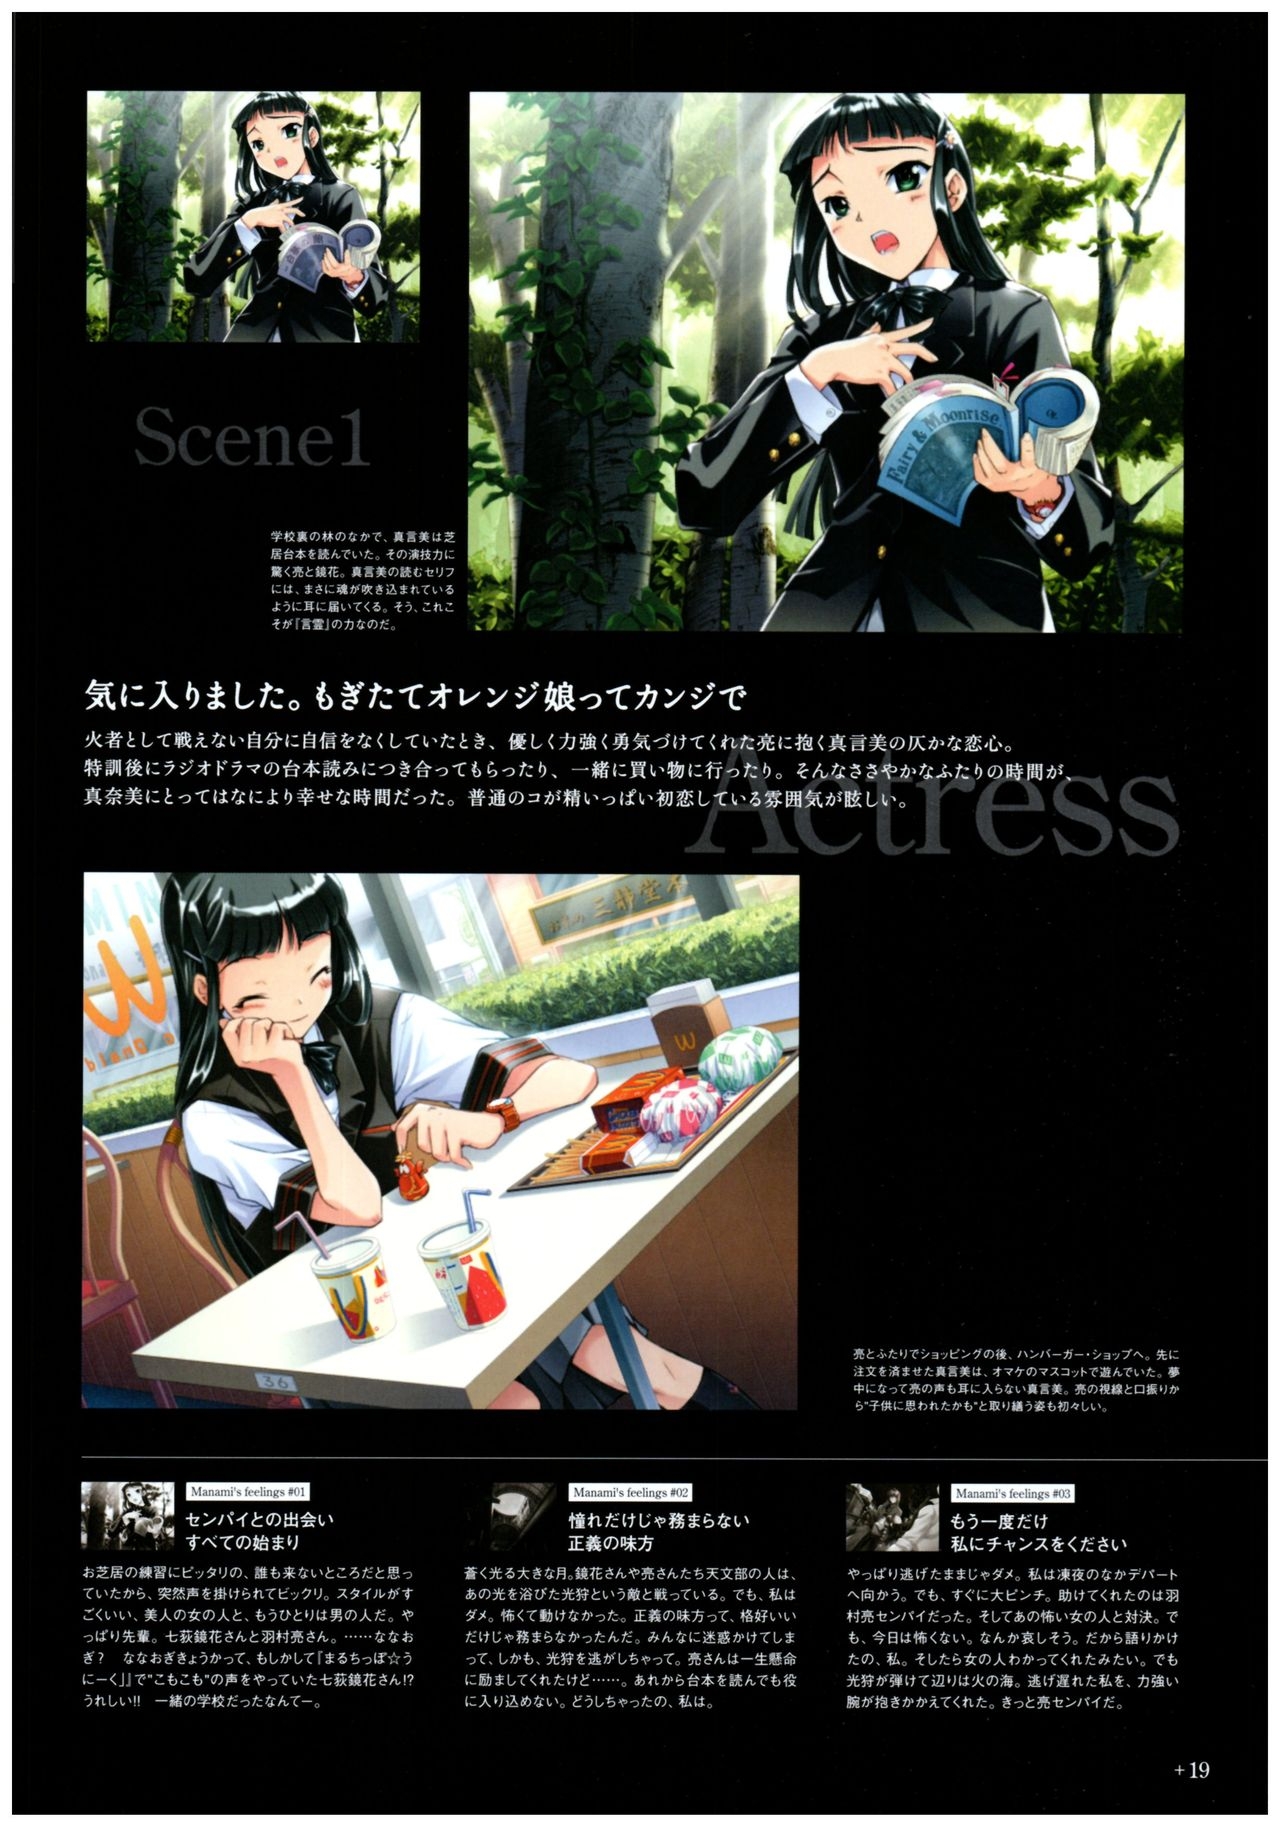 Yoru Ga Kuru! Square Of The Moon Visual Fan Book 40